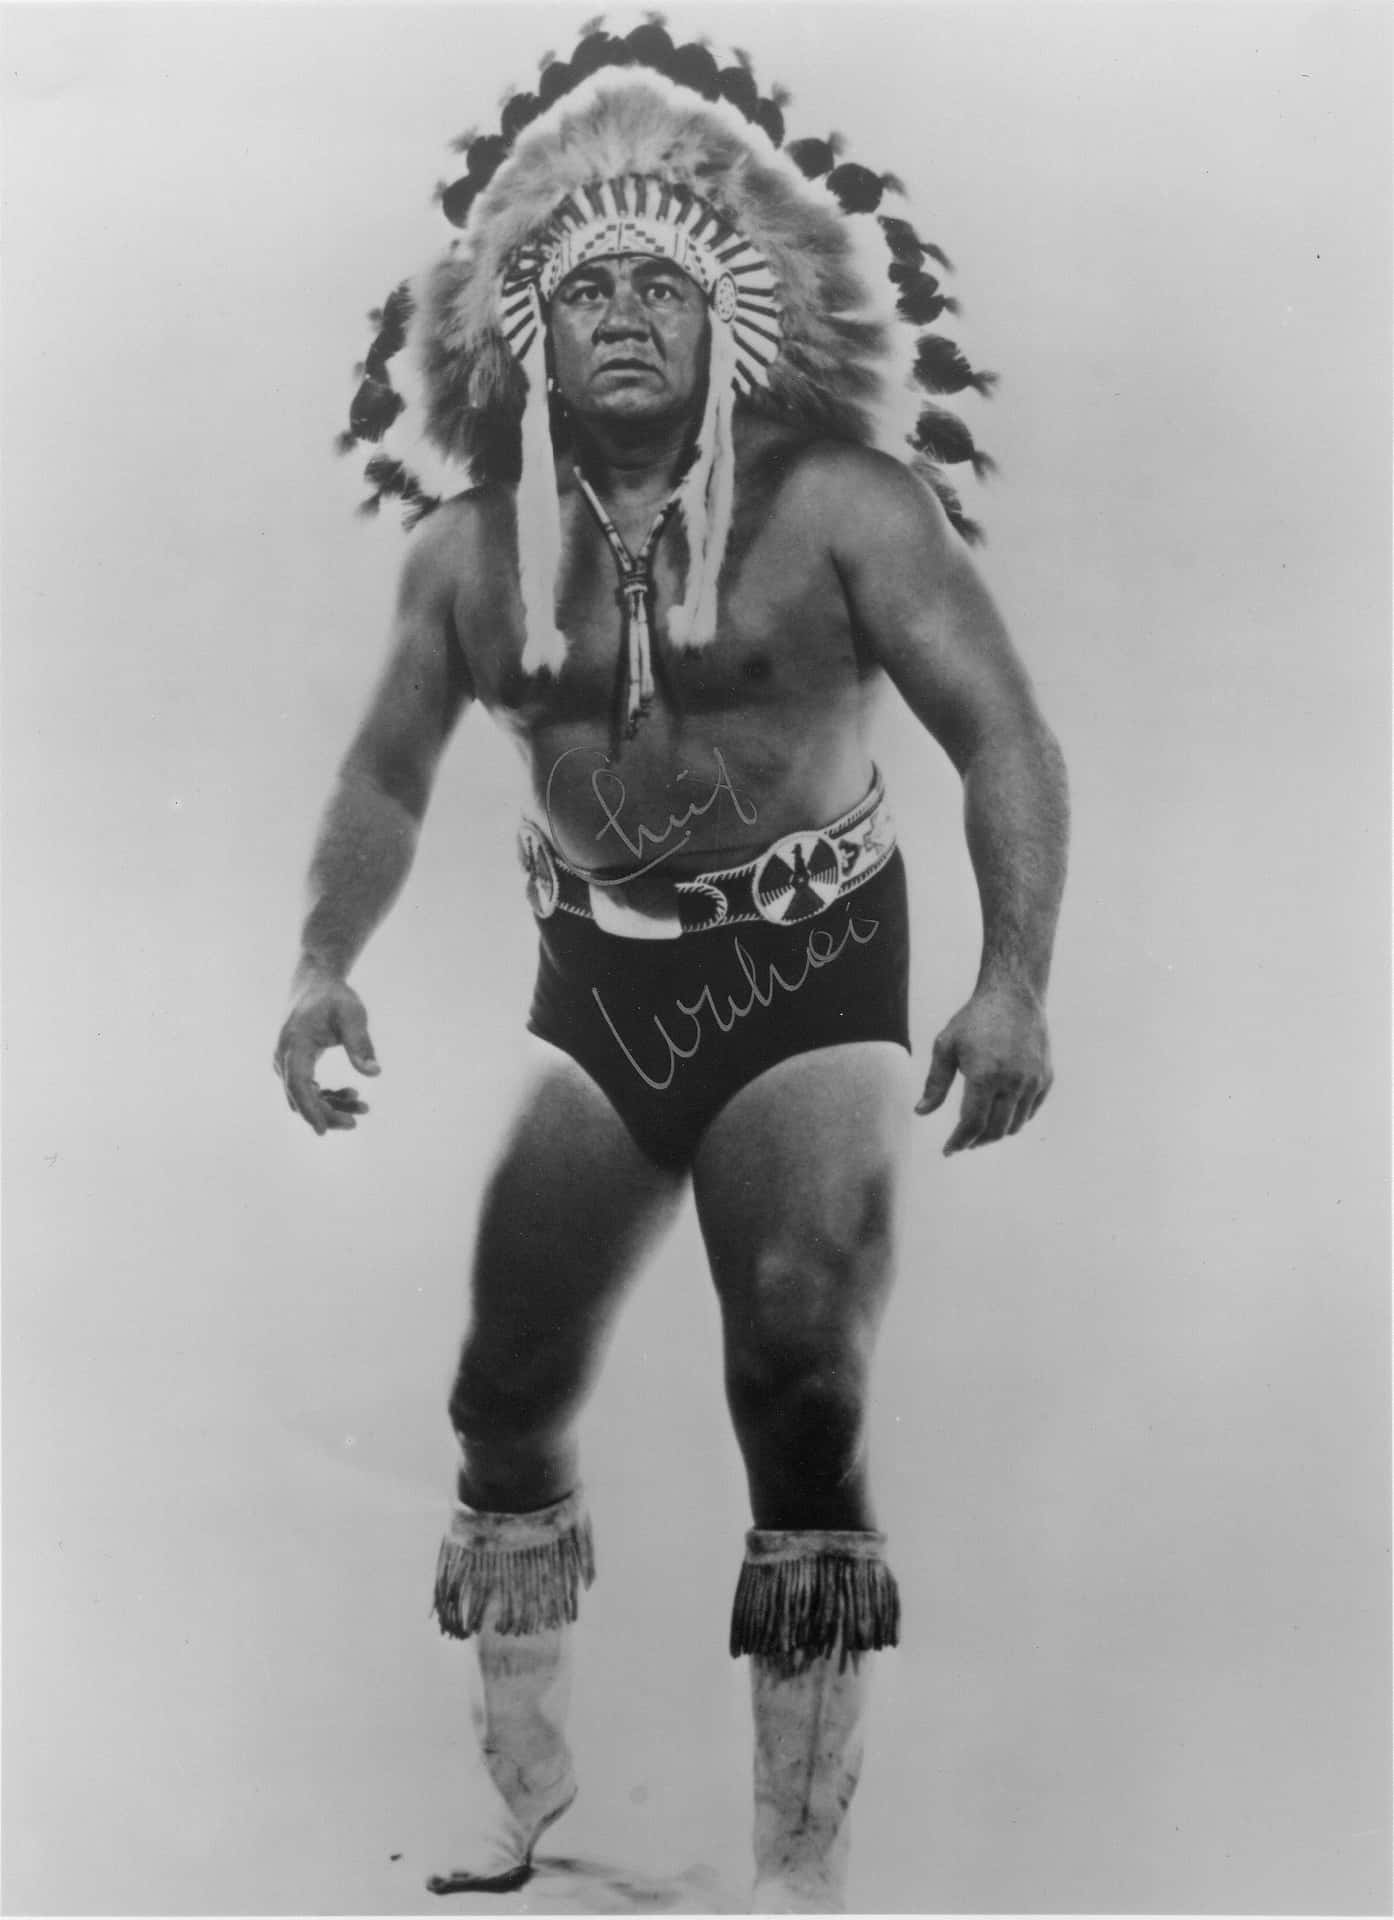 Nativeamerican Ringer Wahoo Mcdaniel Vintage Ganzkörperaufnahme Wallpaper